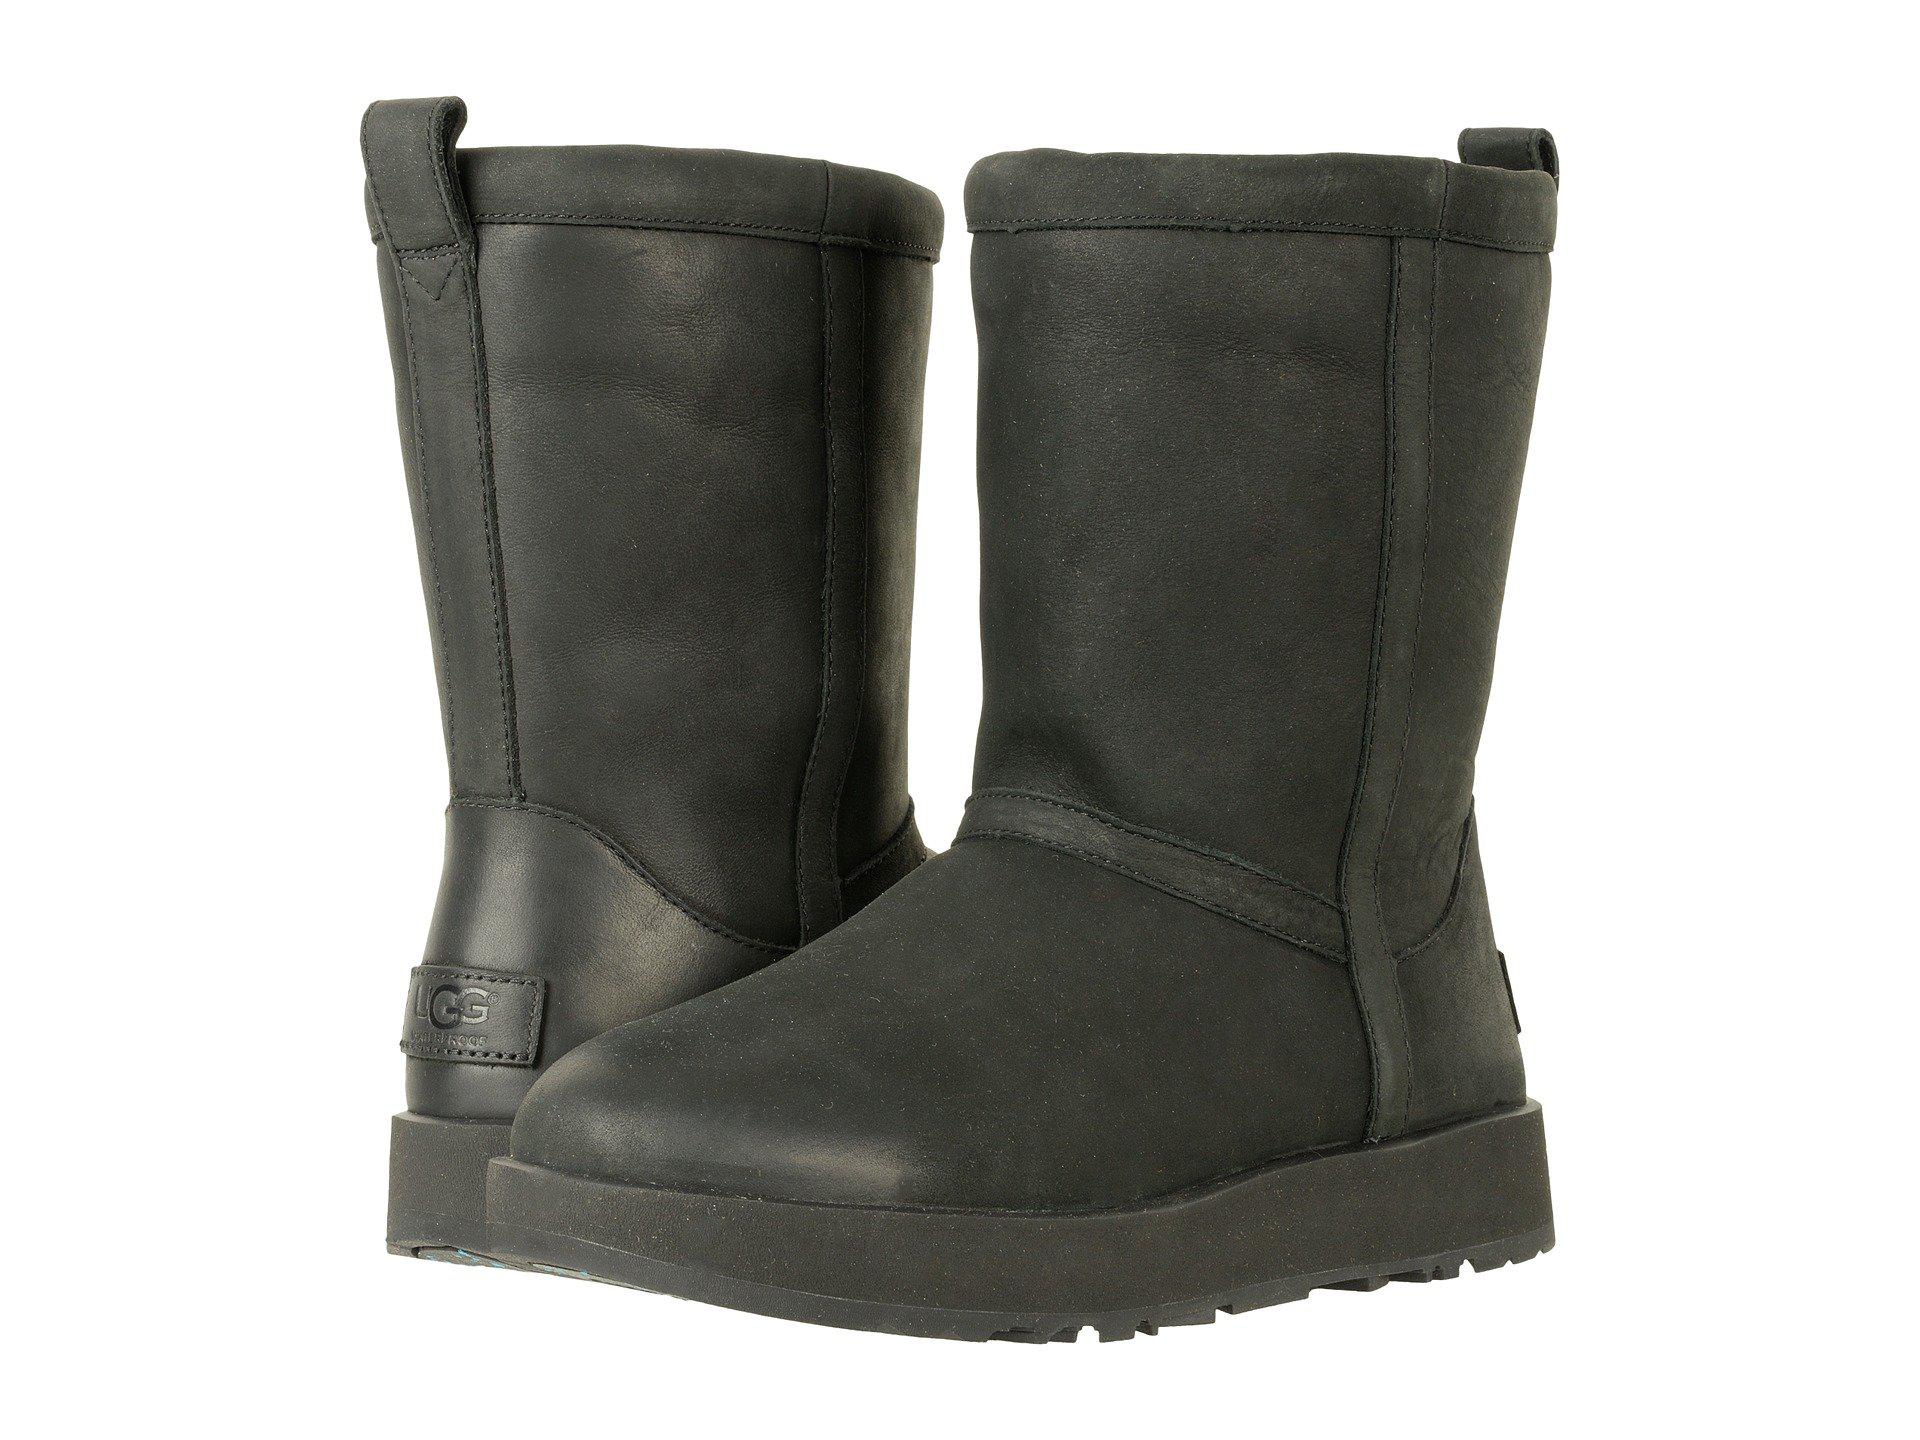 Lyst - Ugg Classic Short L Waterproof (black) Women's Boots in Black